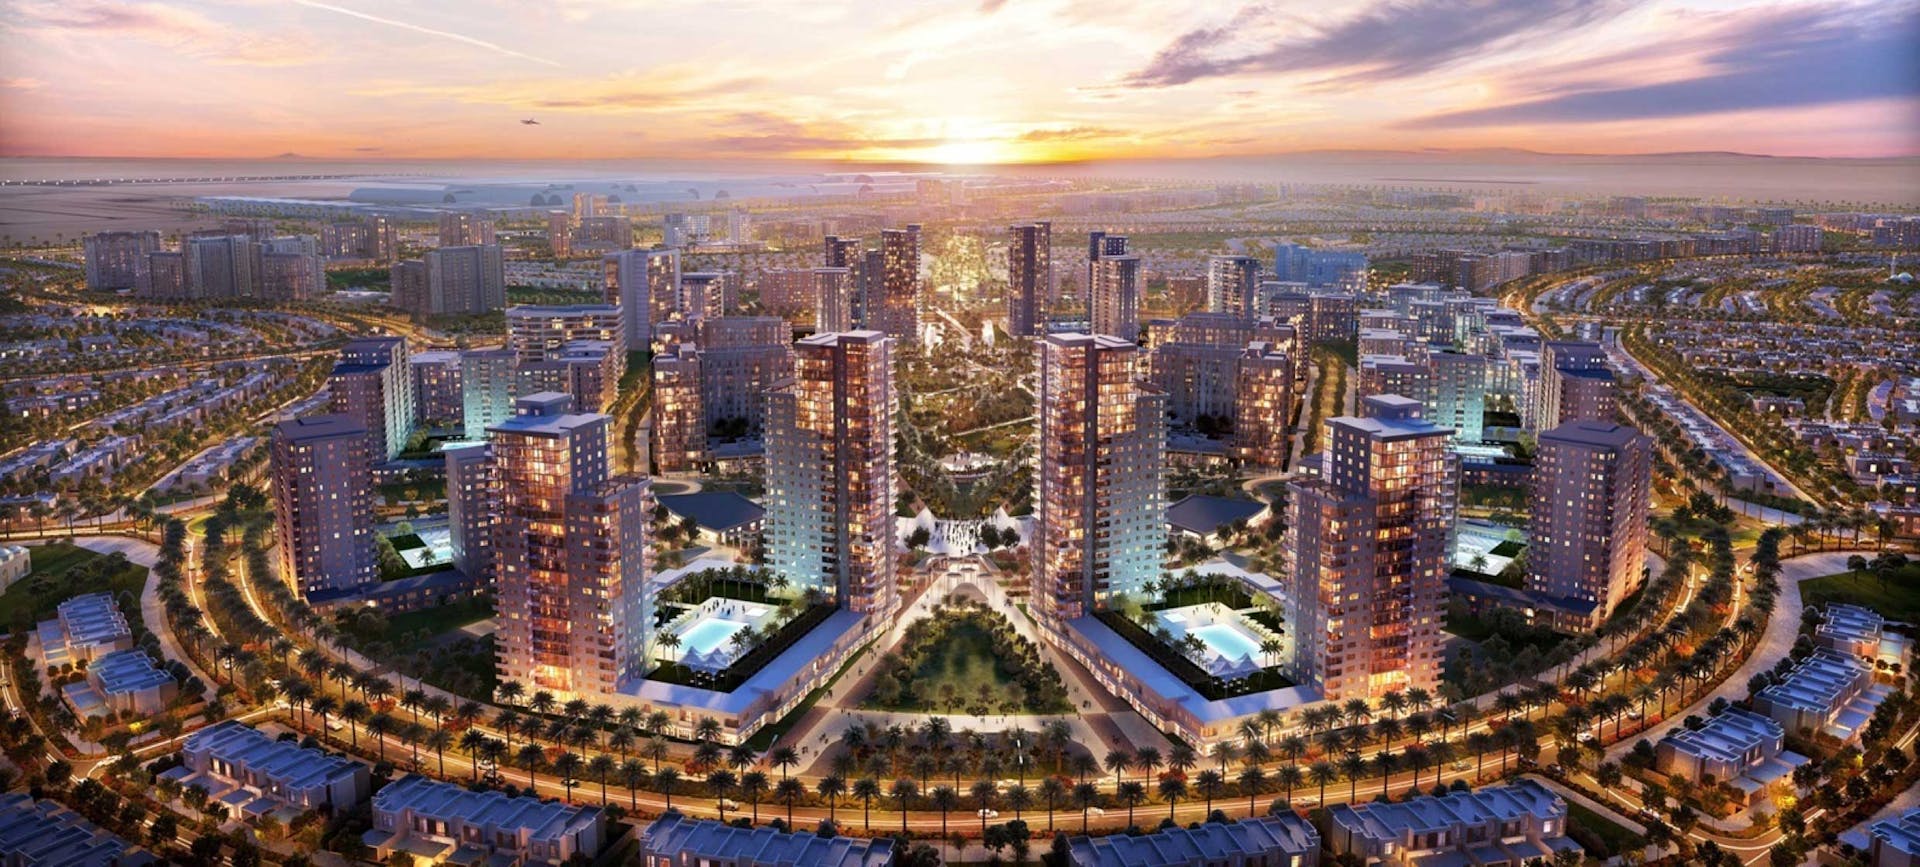 A bird's eye view of a striking real estate development in Dubai